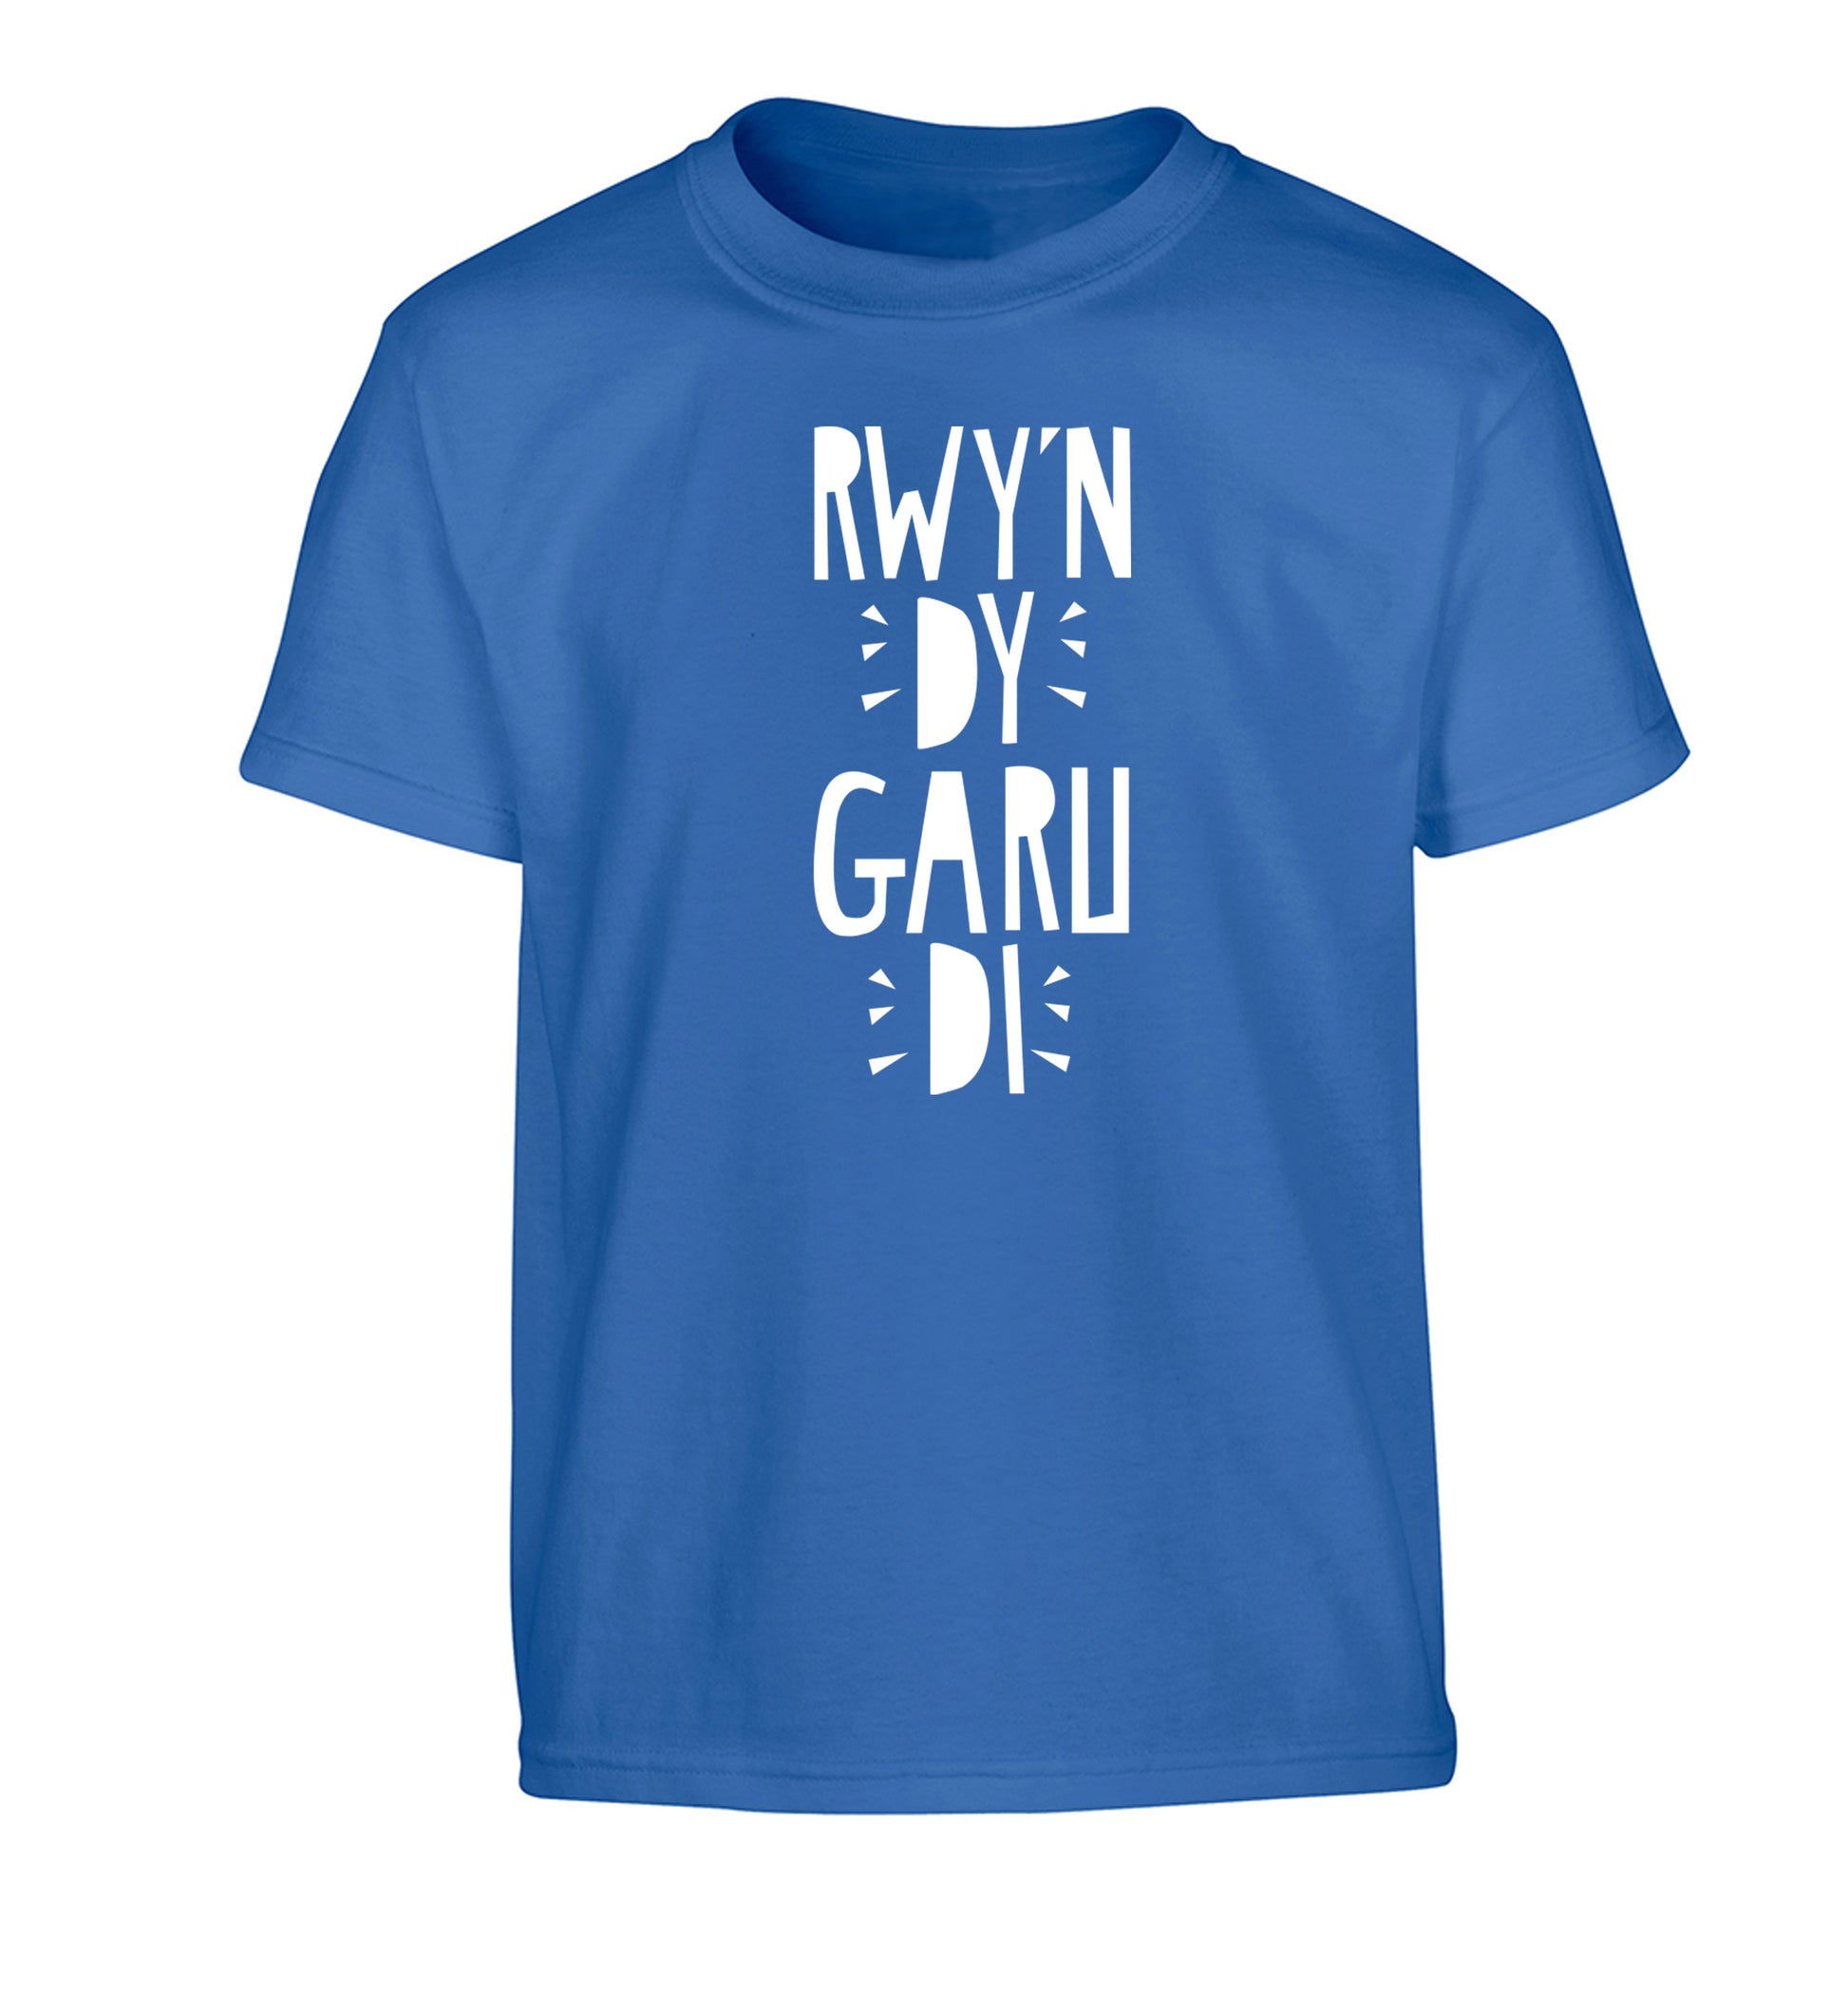 Rwy'n dy garu di - I love you Children's blue Tshirt 12-13 Years